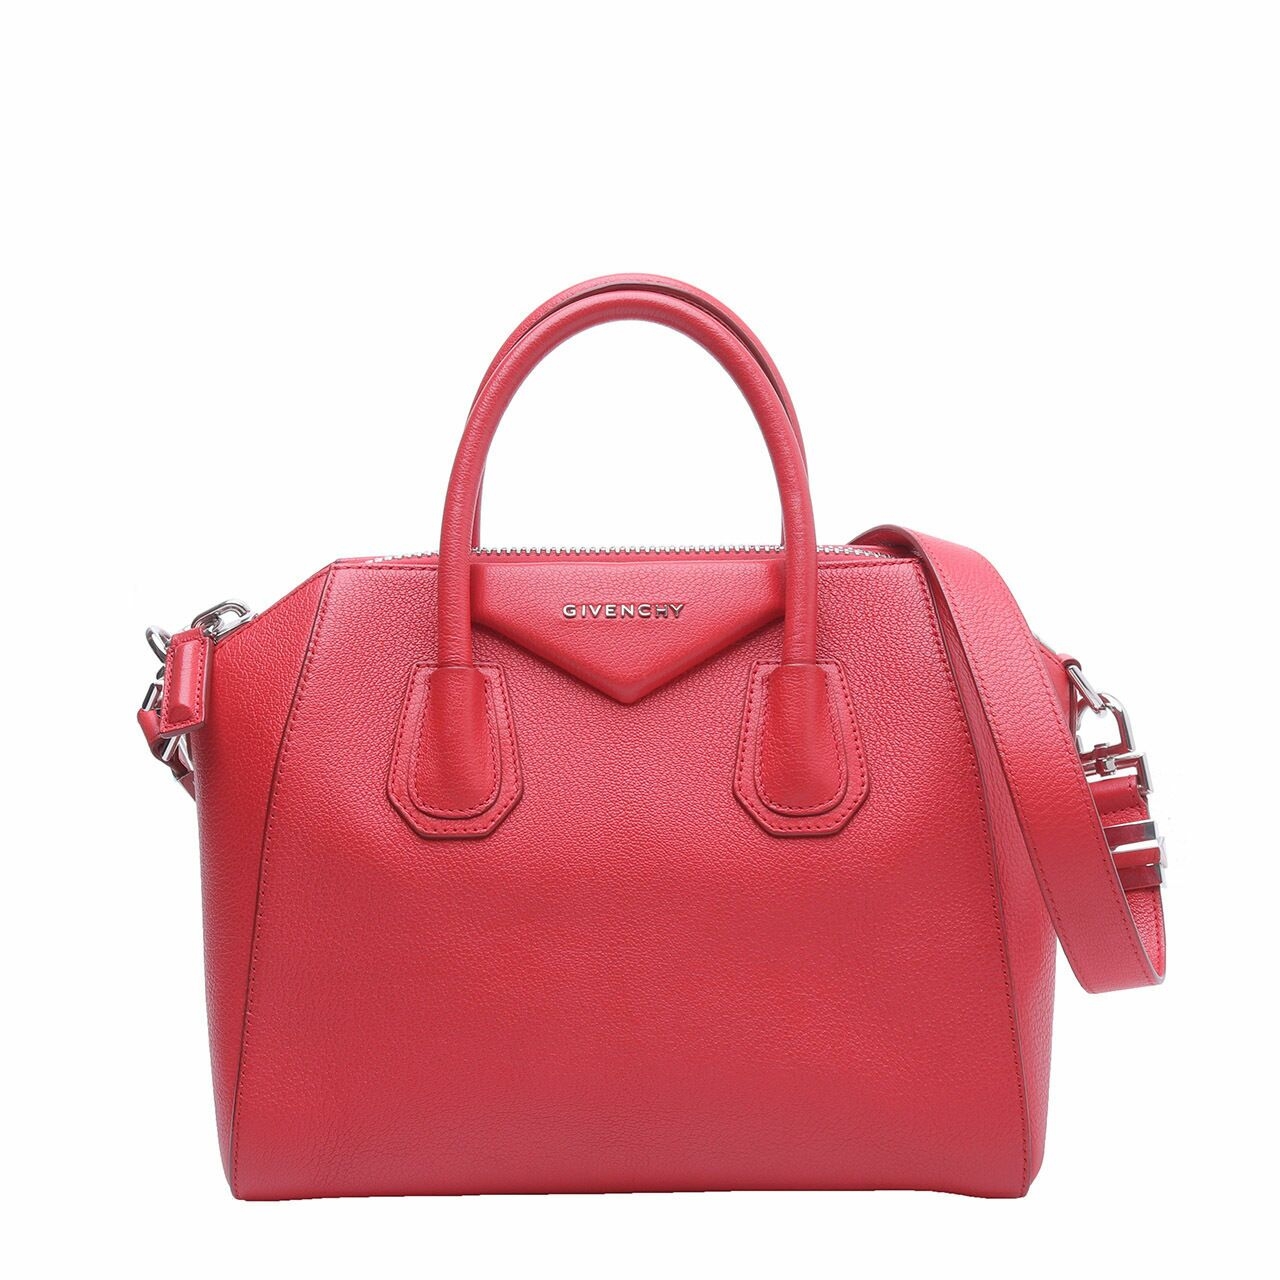 Givenchy Antigona Leather Red Satchel Bag